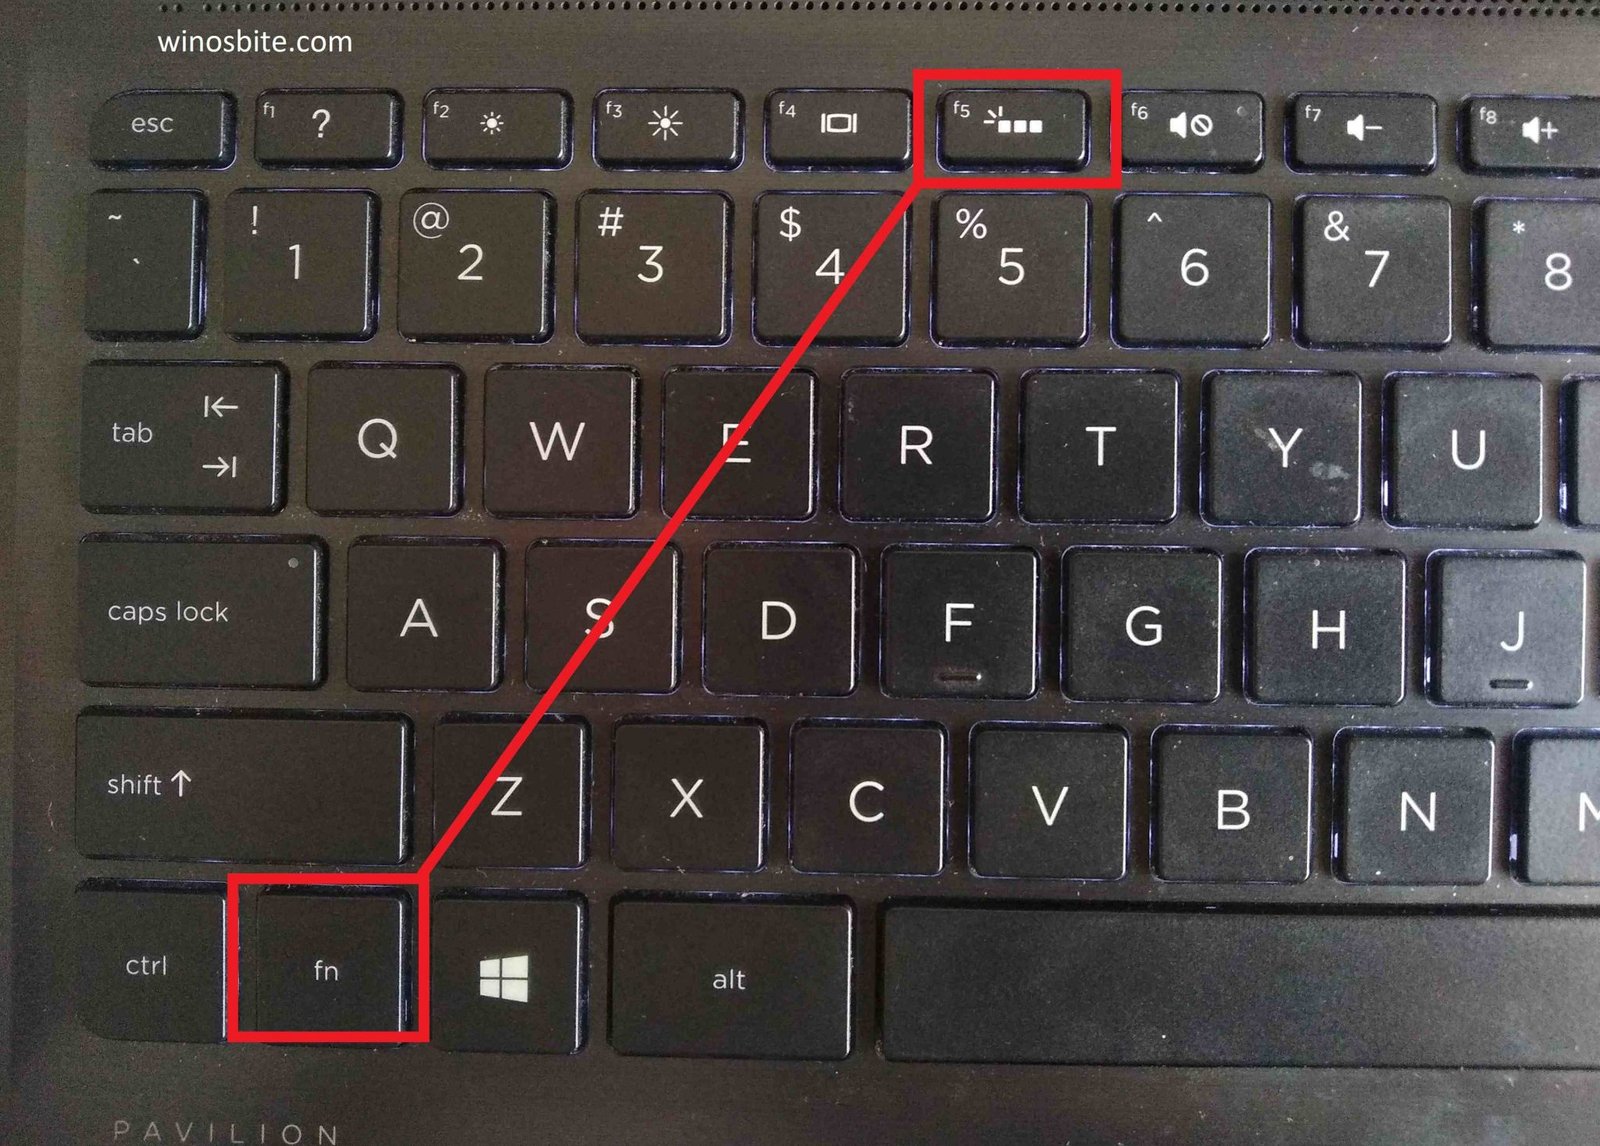 dell turn on keyboard backlight